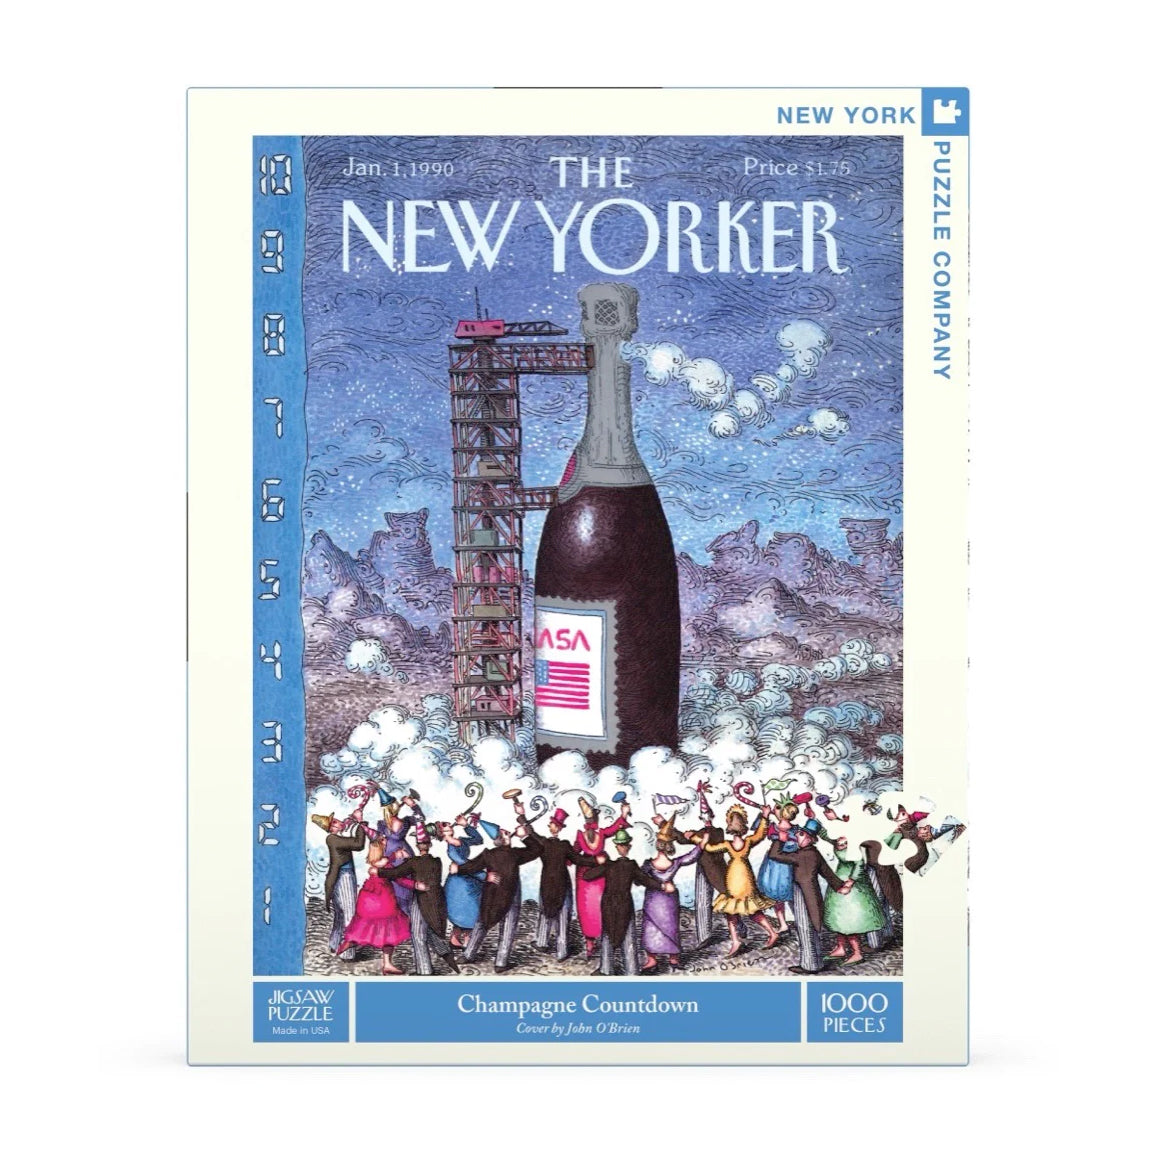 Puzzel the New Yorker│Champagne Countdown 1000 stukjes│New York Puzzle Company│art. NPZNY2249│voorkant verpakking